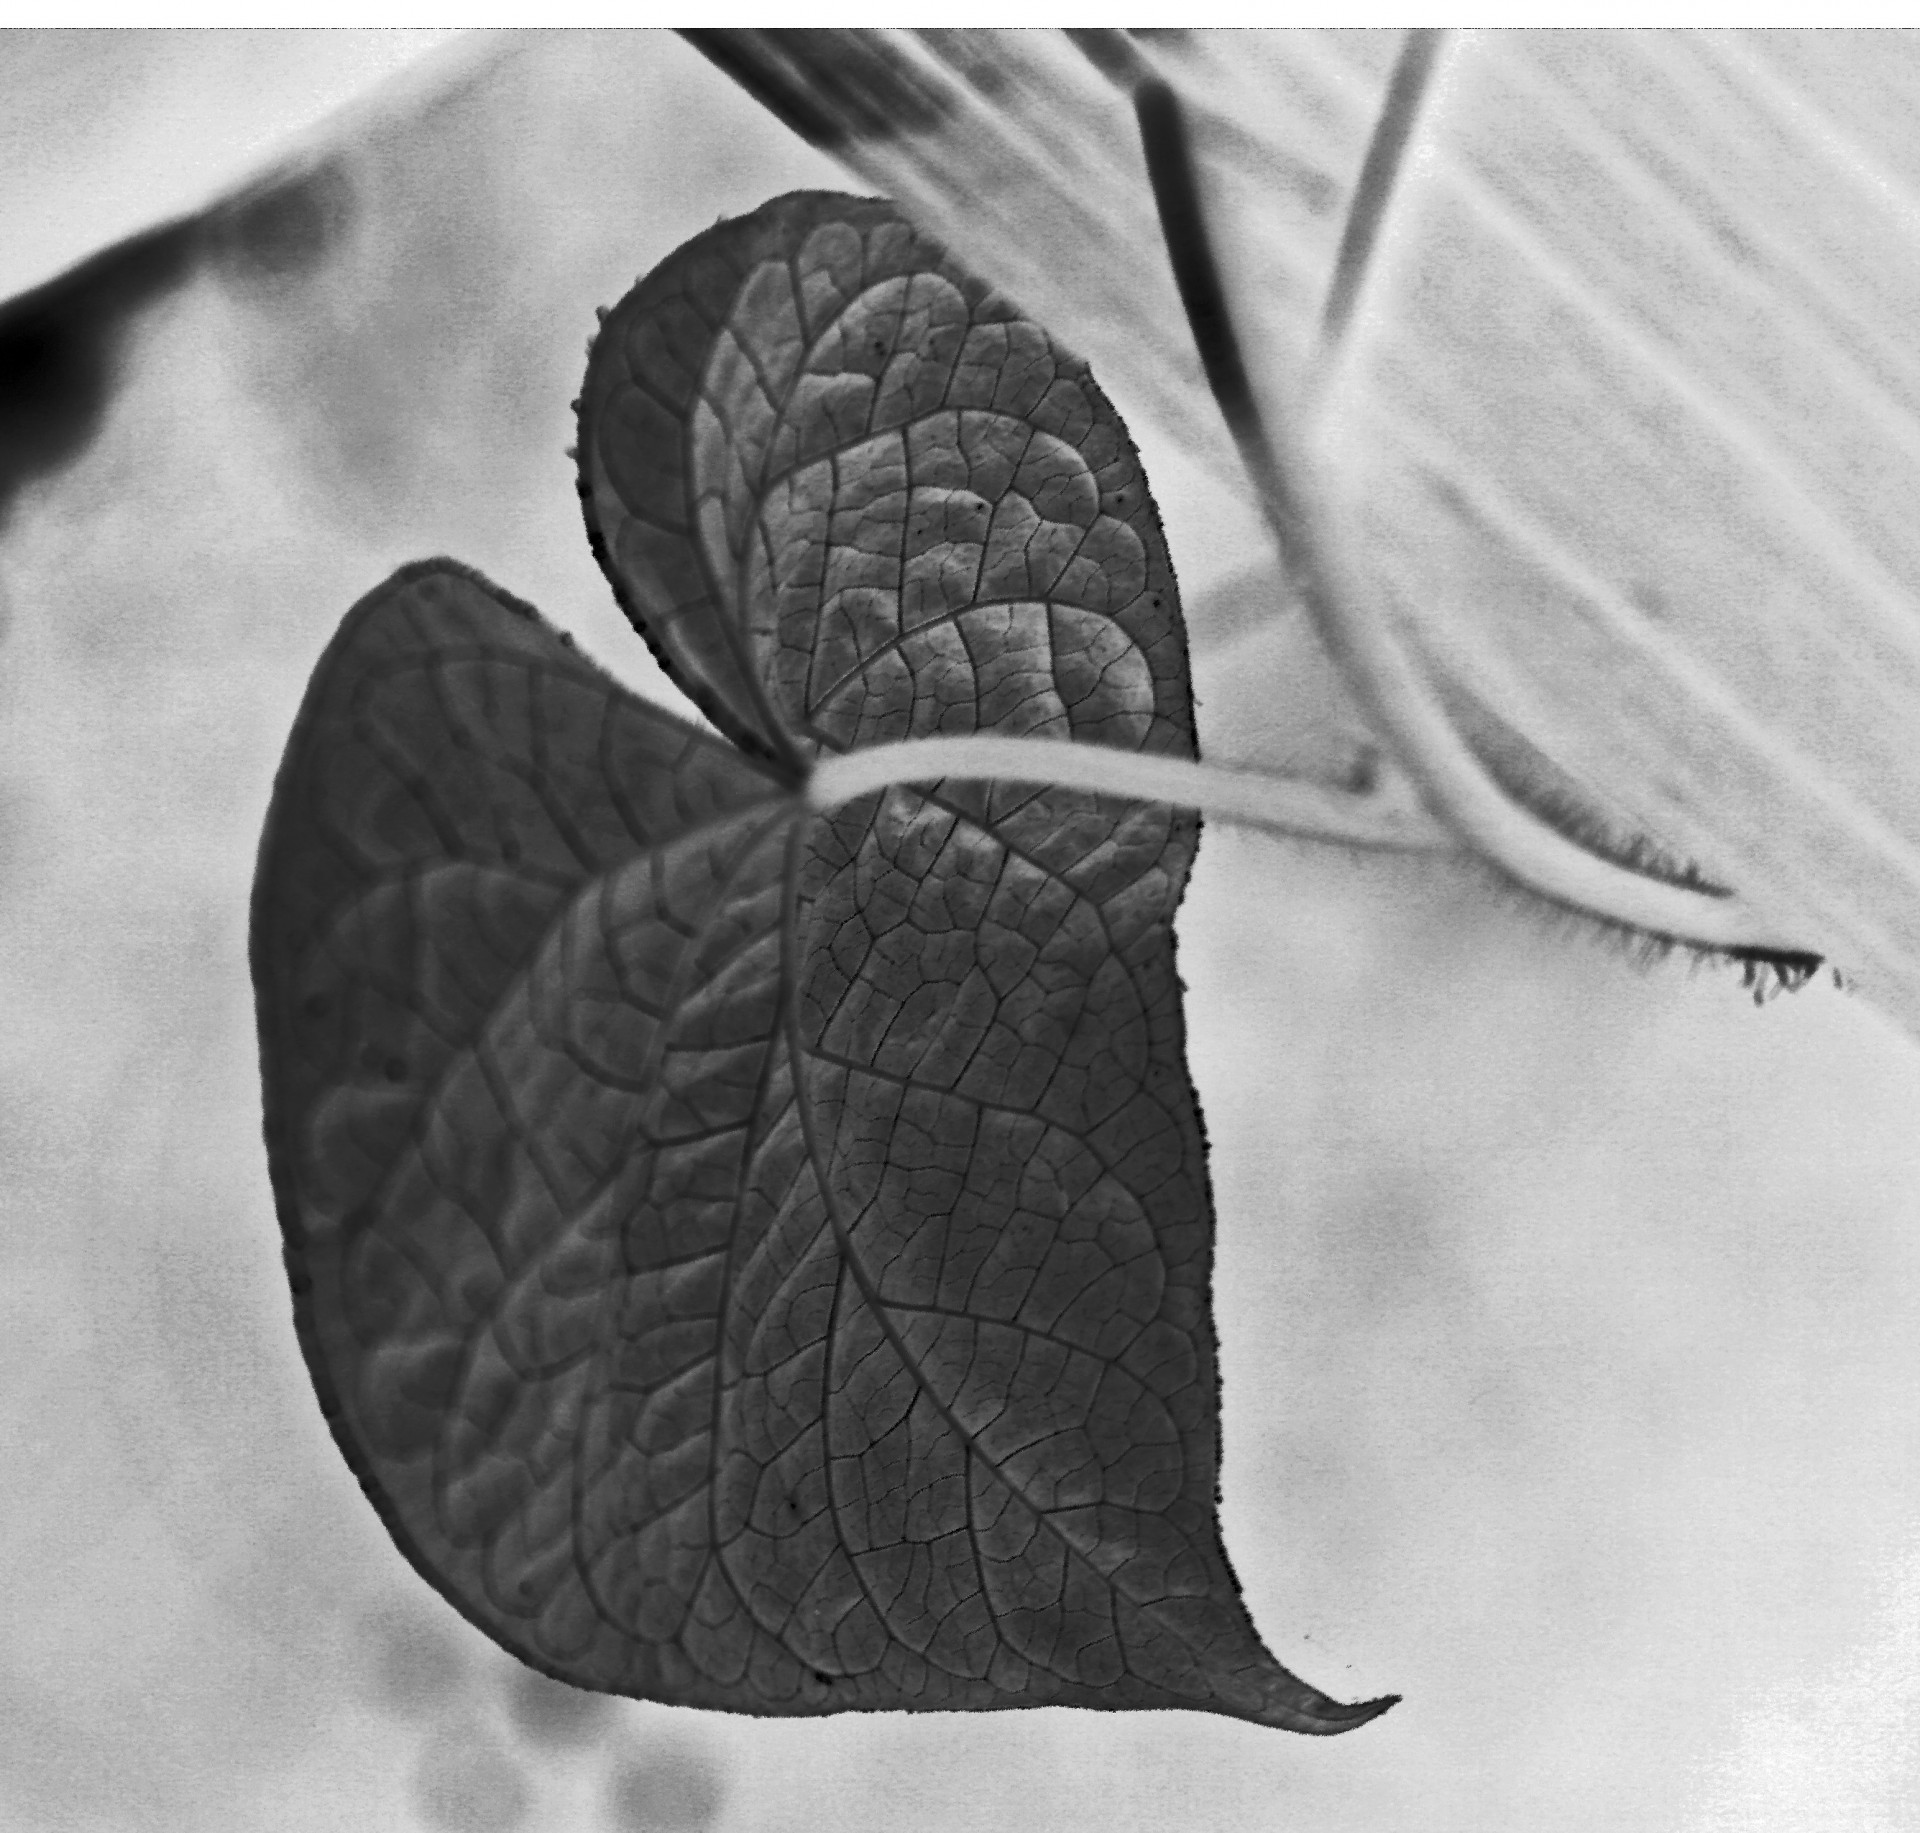 Frunze inversat în alb și negru